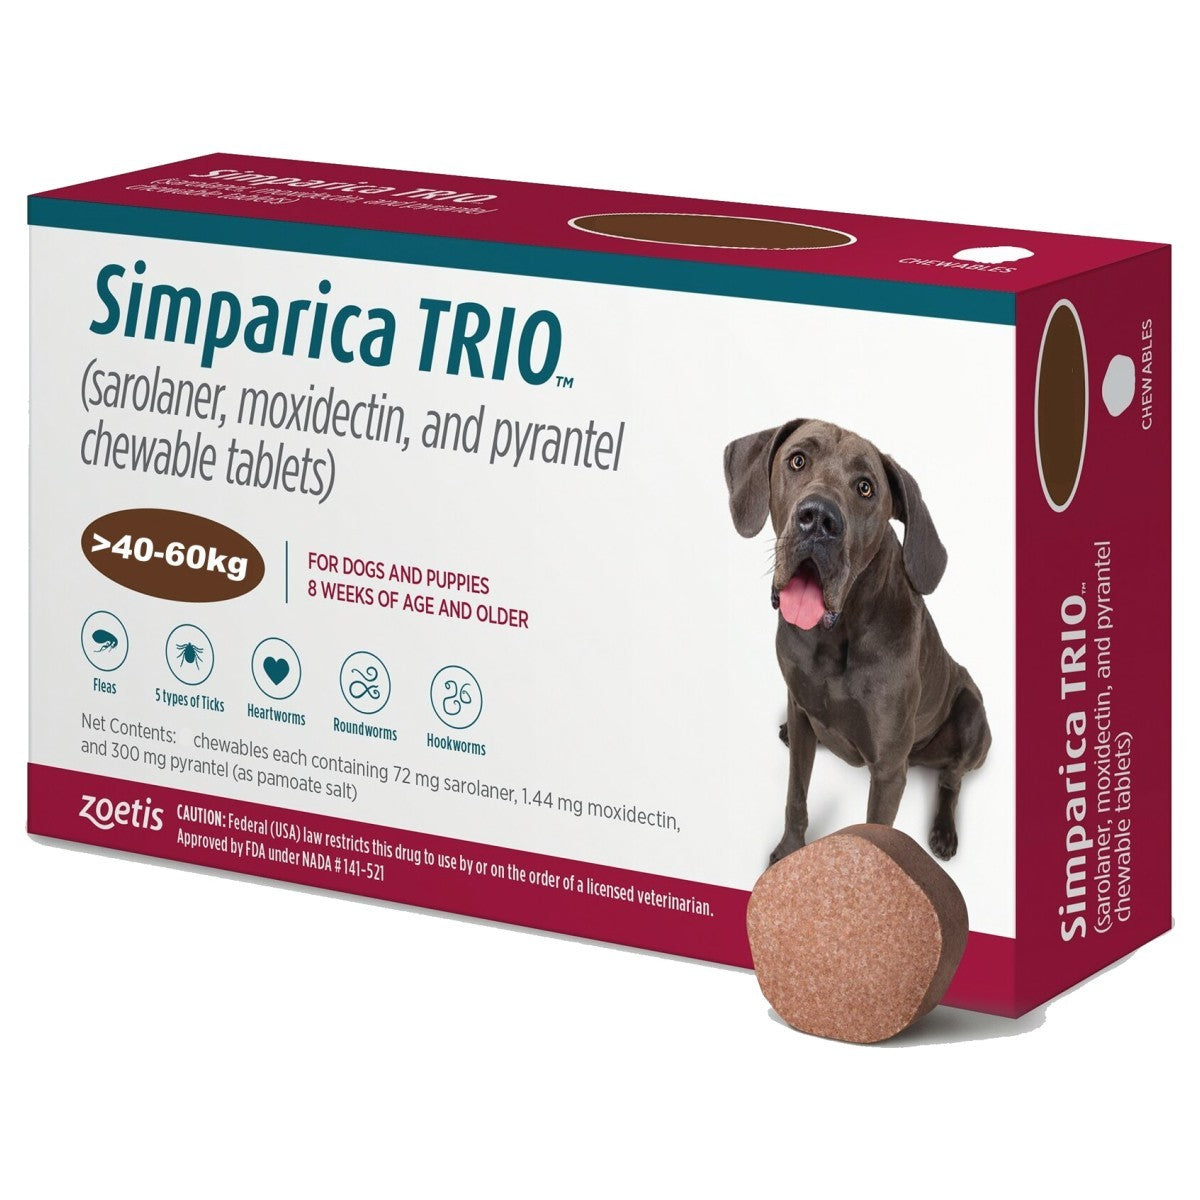 Simparica Trio 40-60 kg (3 tablets)